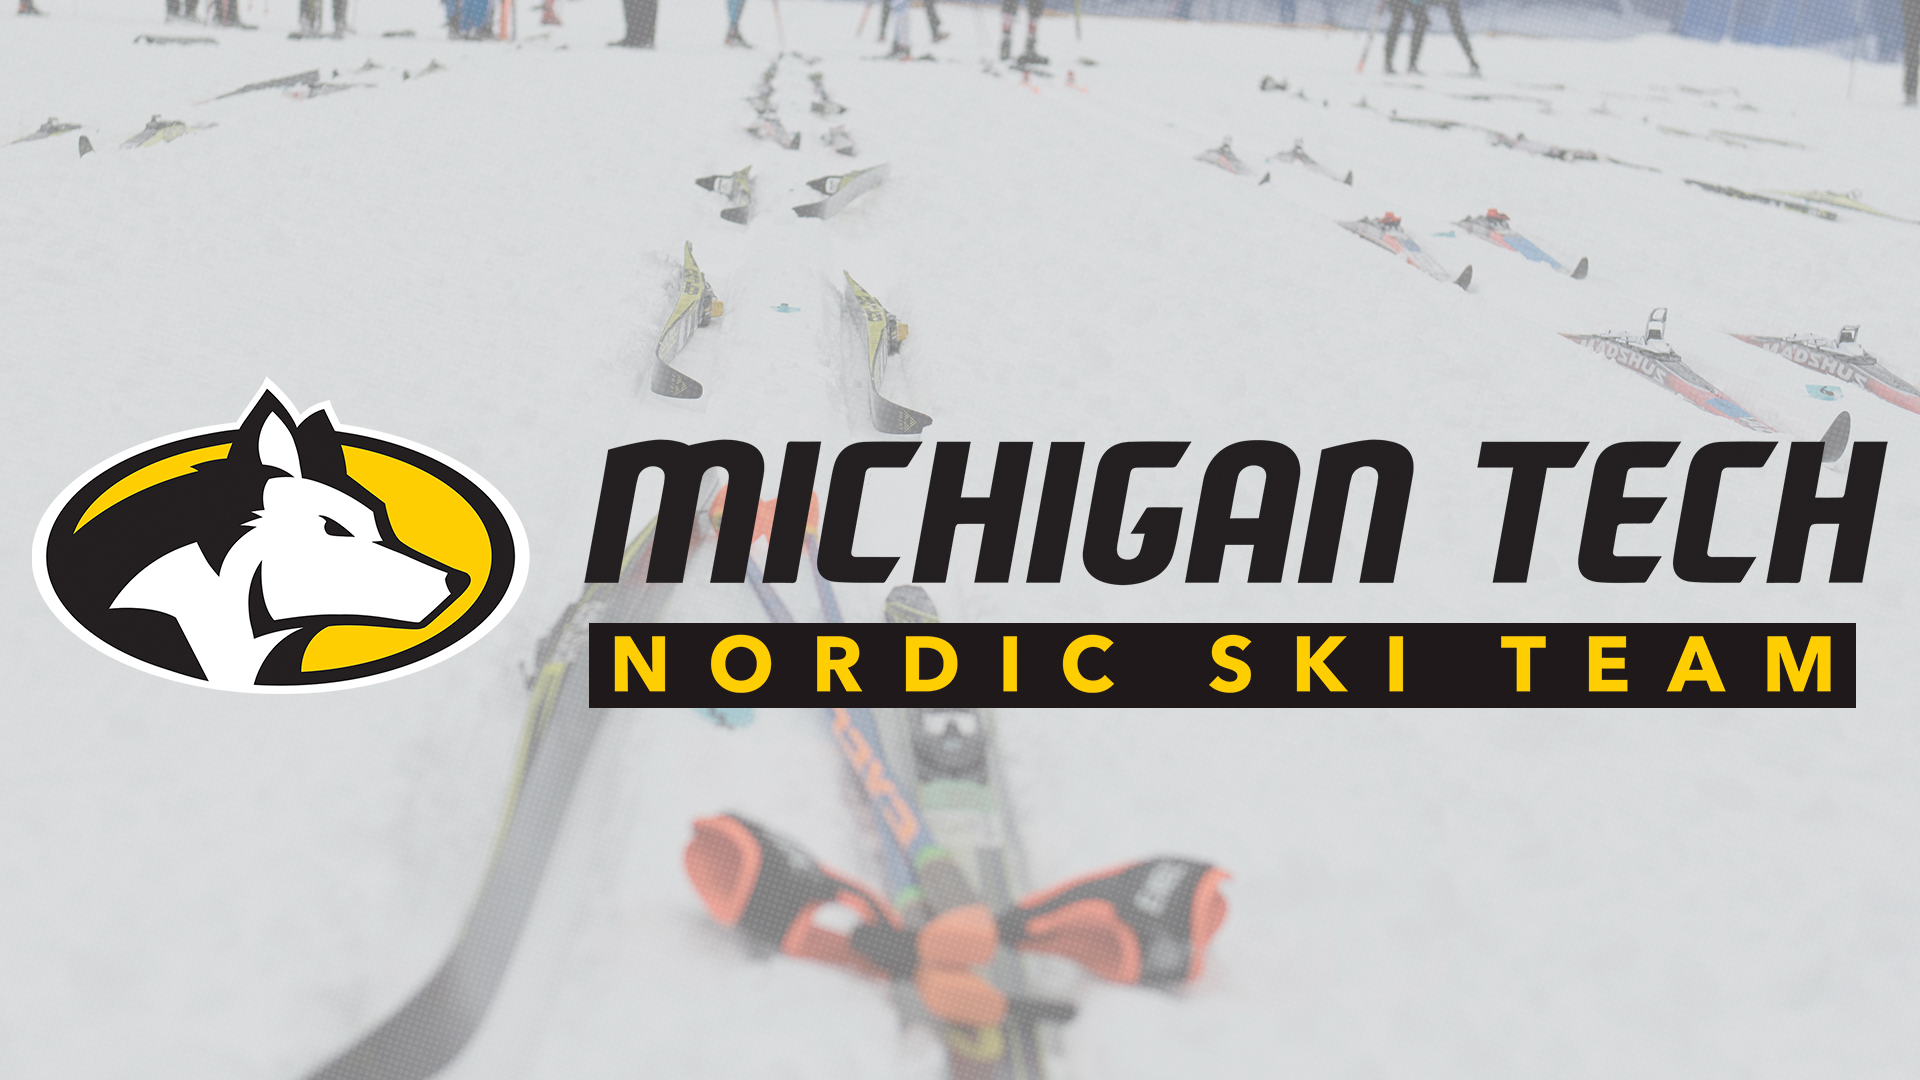 Nordic Ski Team Announces 2022-23 Incoming Class